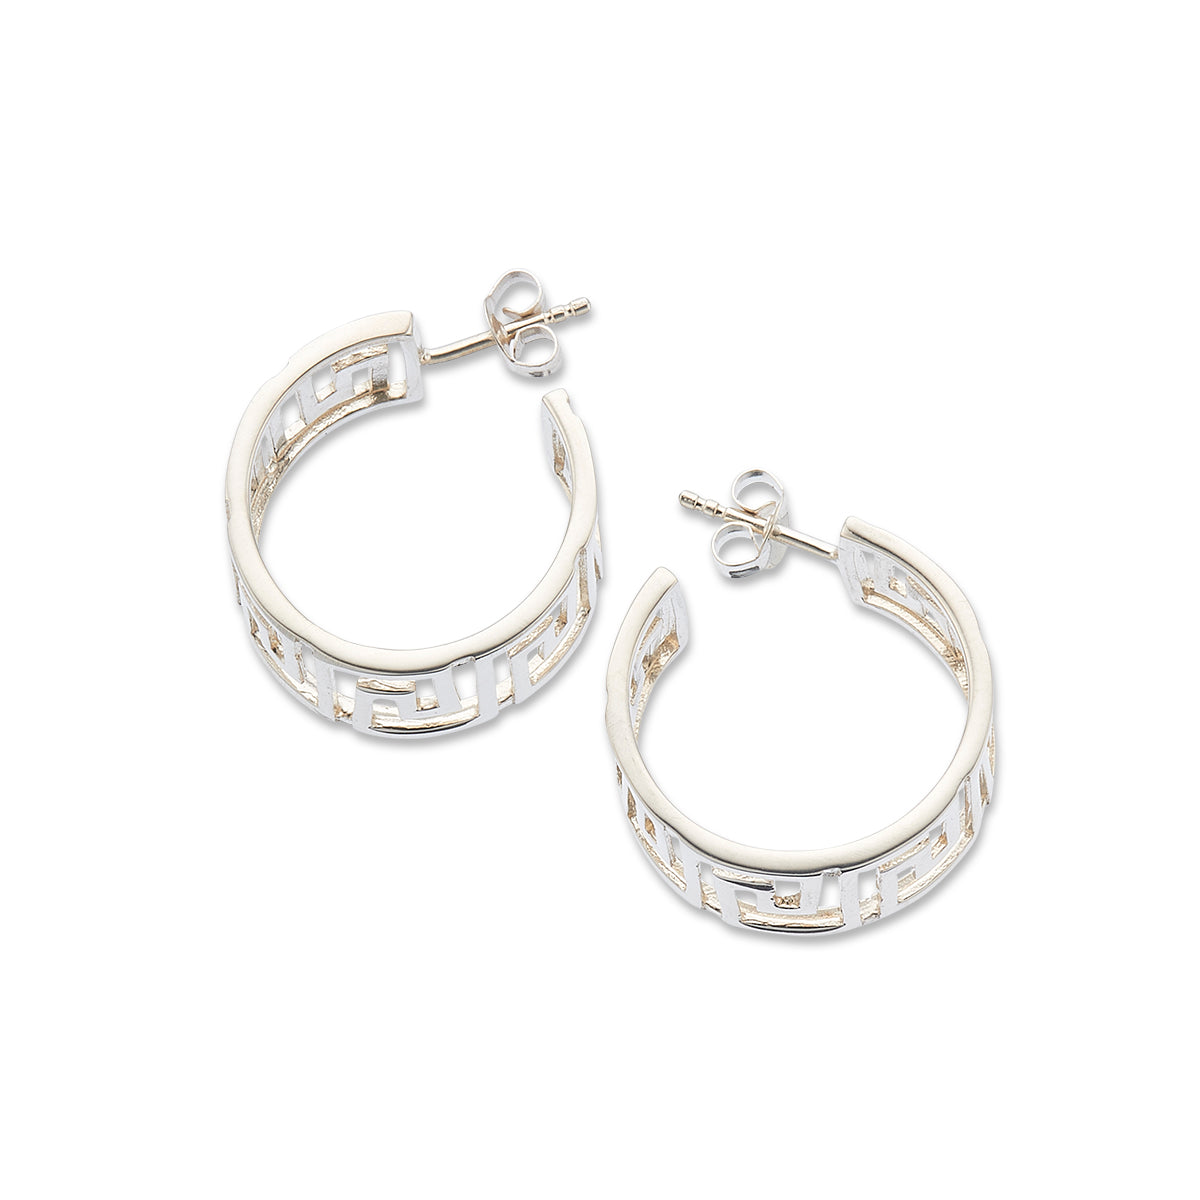 Greek silver key hoop earrings